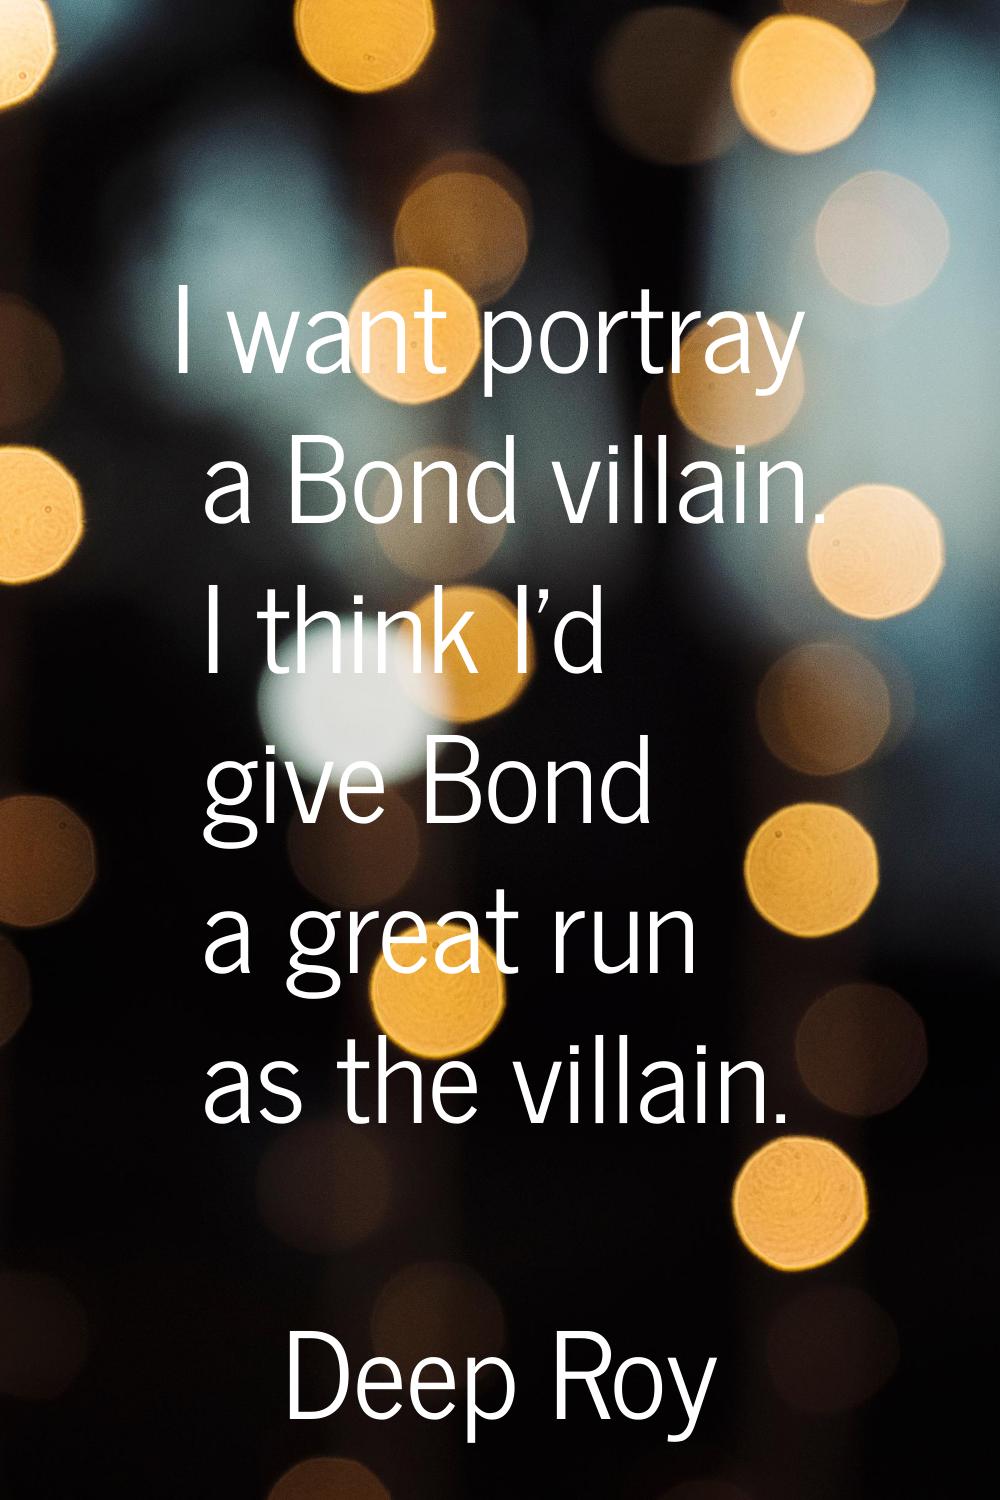 I want portray a Bond villain. I think I'd give Bond a great run as the villain.